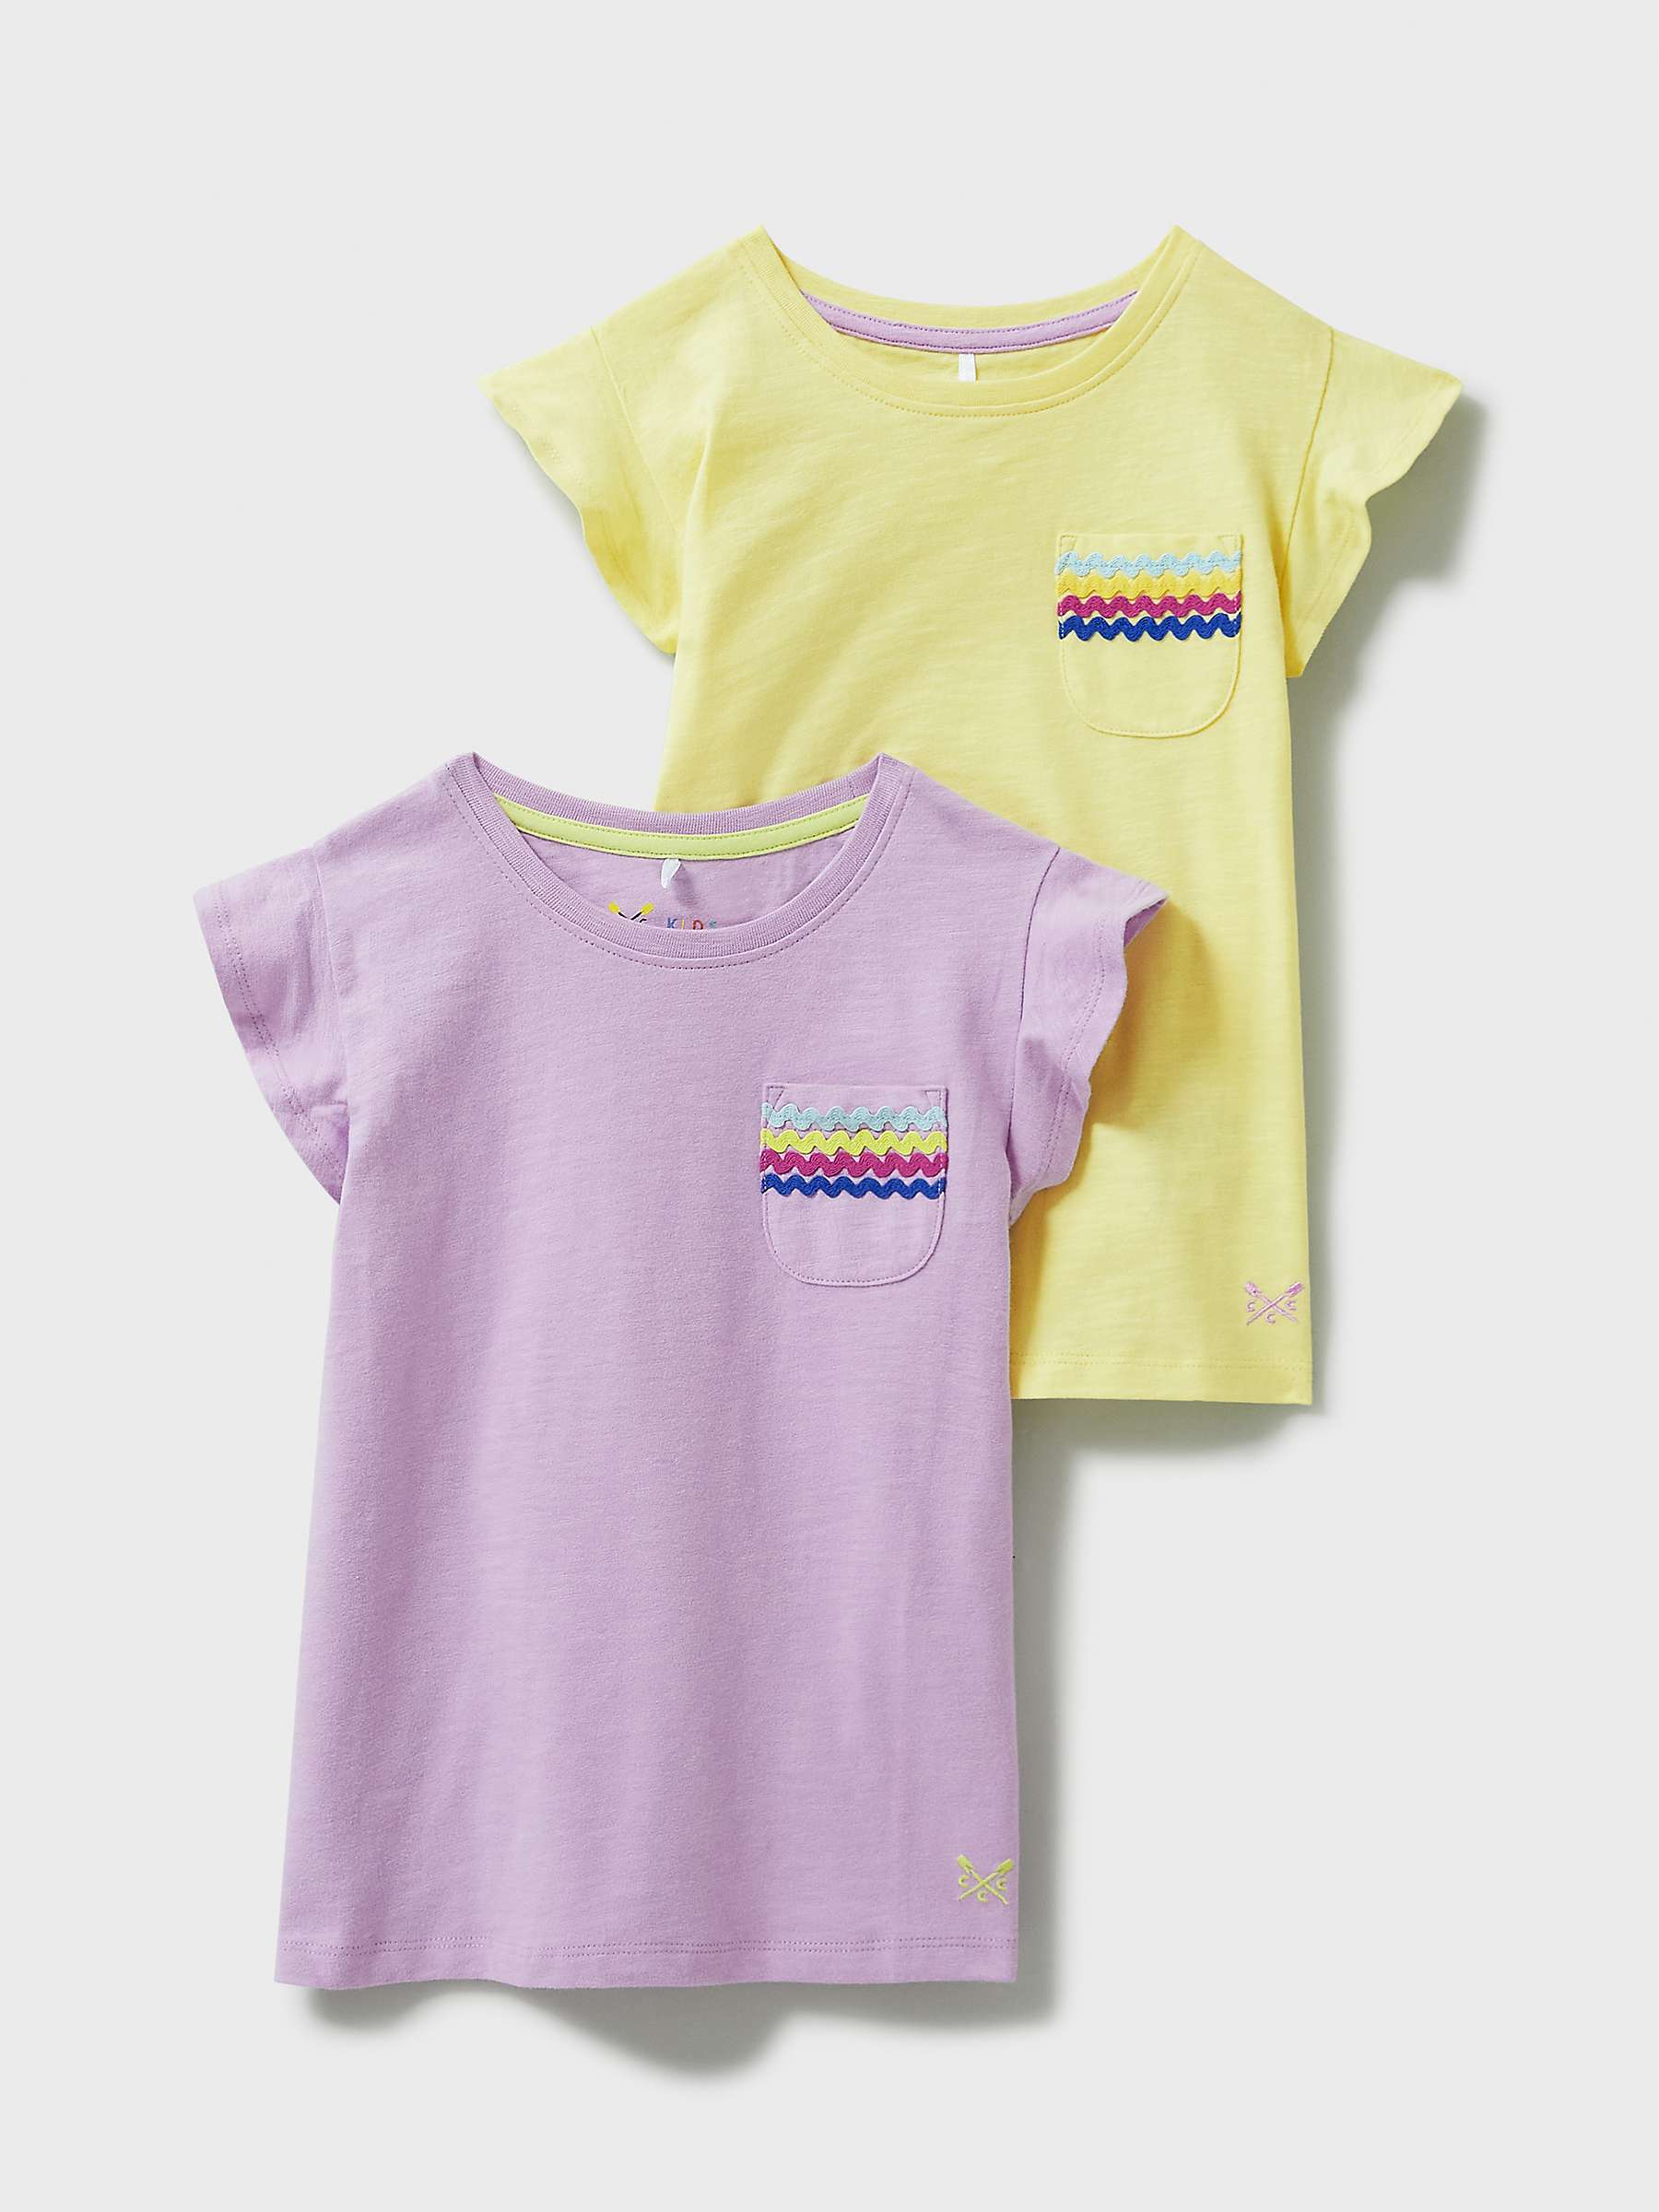 Buy Crew Clothing Kids' Ric Rac Trim Pocket Detail T-Shirts, Pack of 2, Lilac/Yellow Online at johnlewis.com